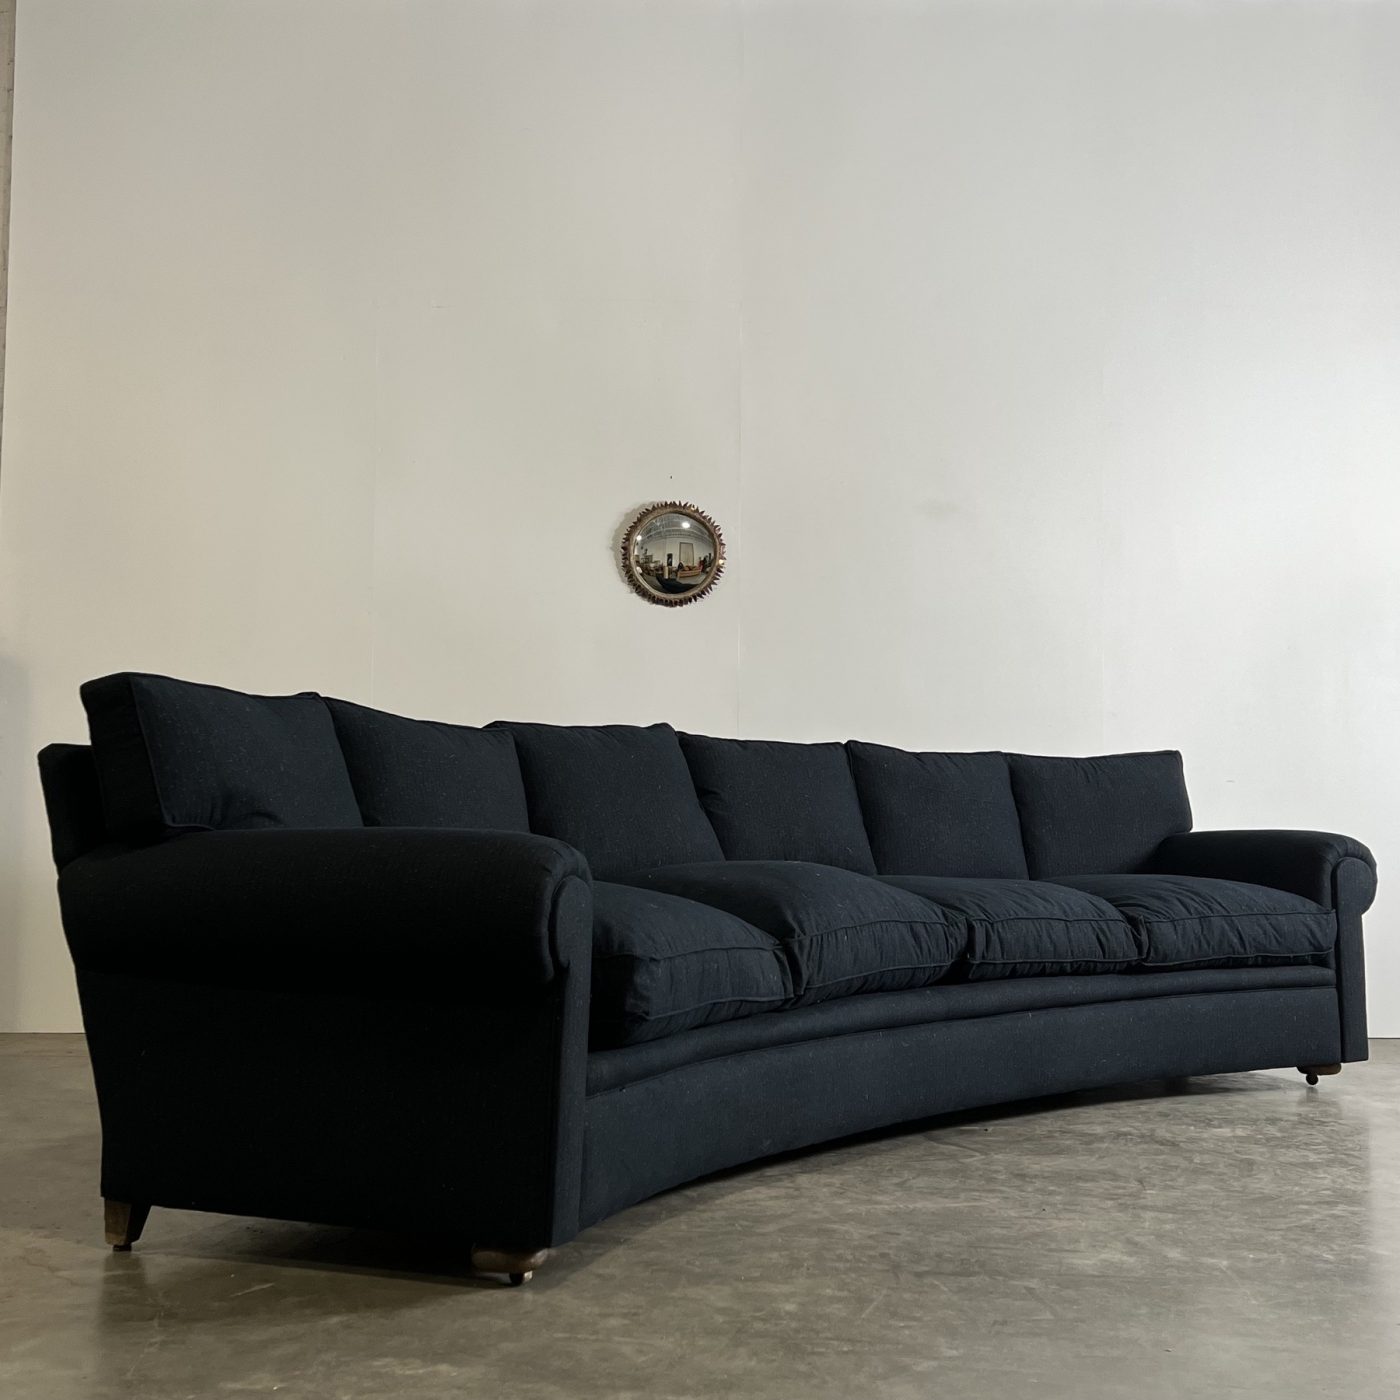 objet-vagabond-huge-sofa0003